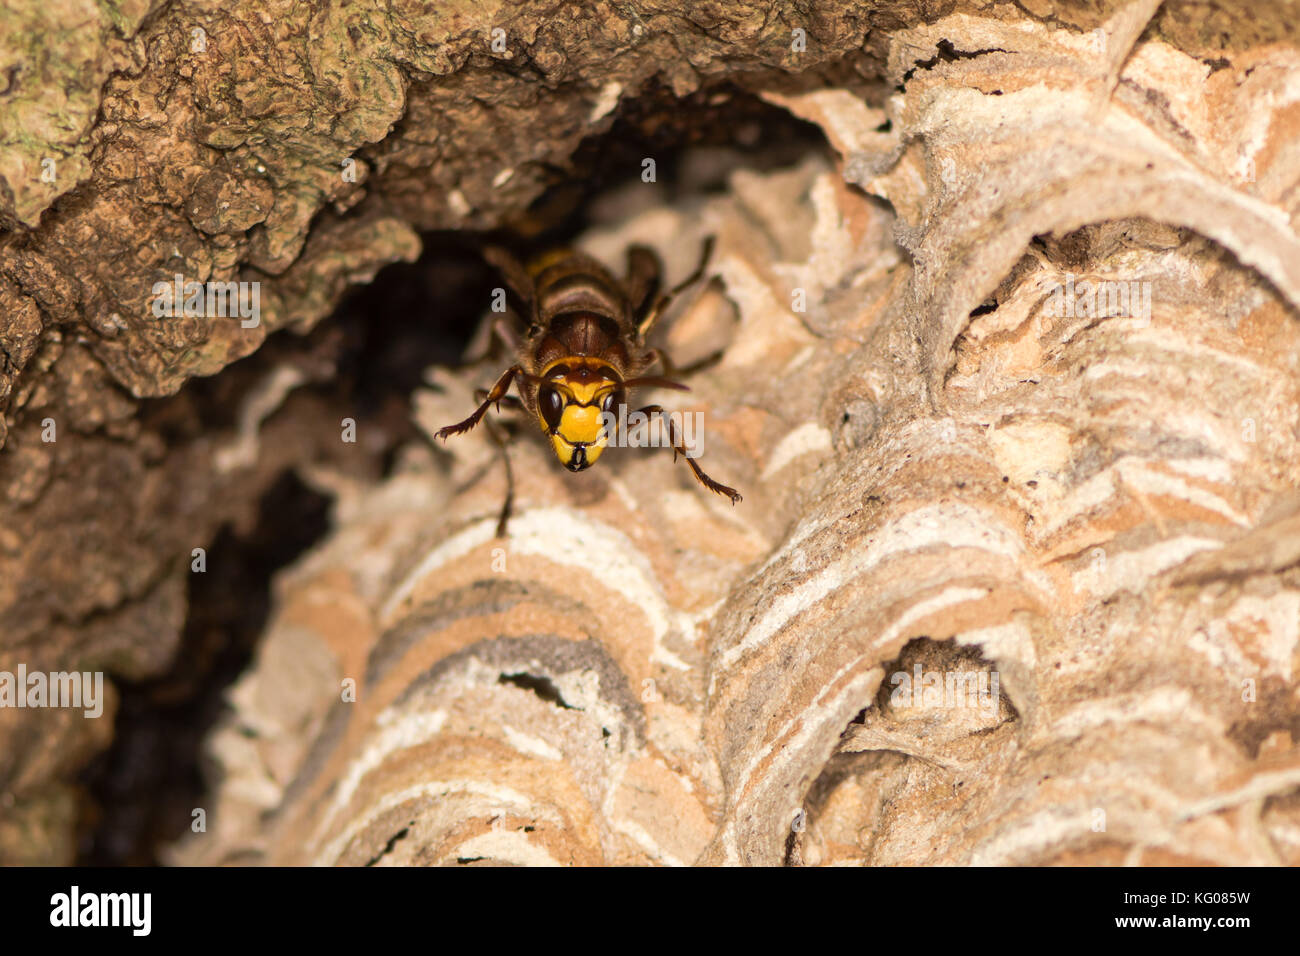 European hornet (Vespa crabro) on nest. Large wasp standing on paper nest, showing defensive behaviour, in Wiltshire, UK Stock Photo